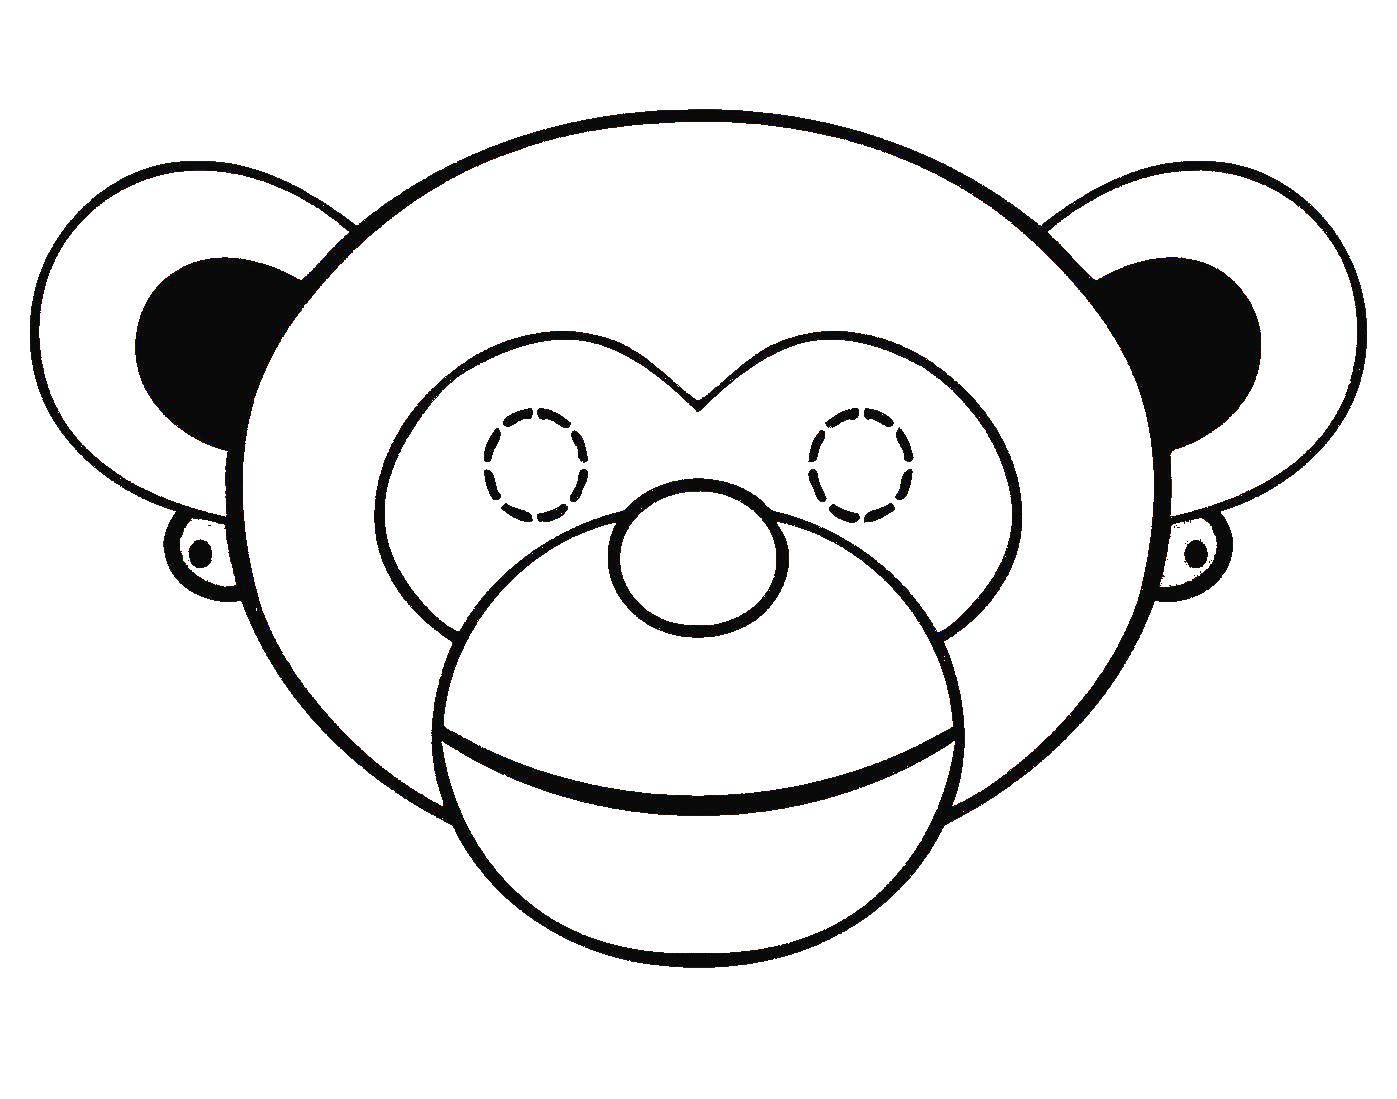 Coloring Mask monkey. Category Masks . Tags:  Masquerade, mask.